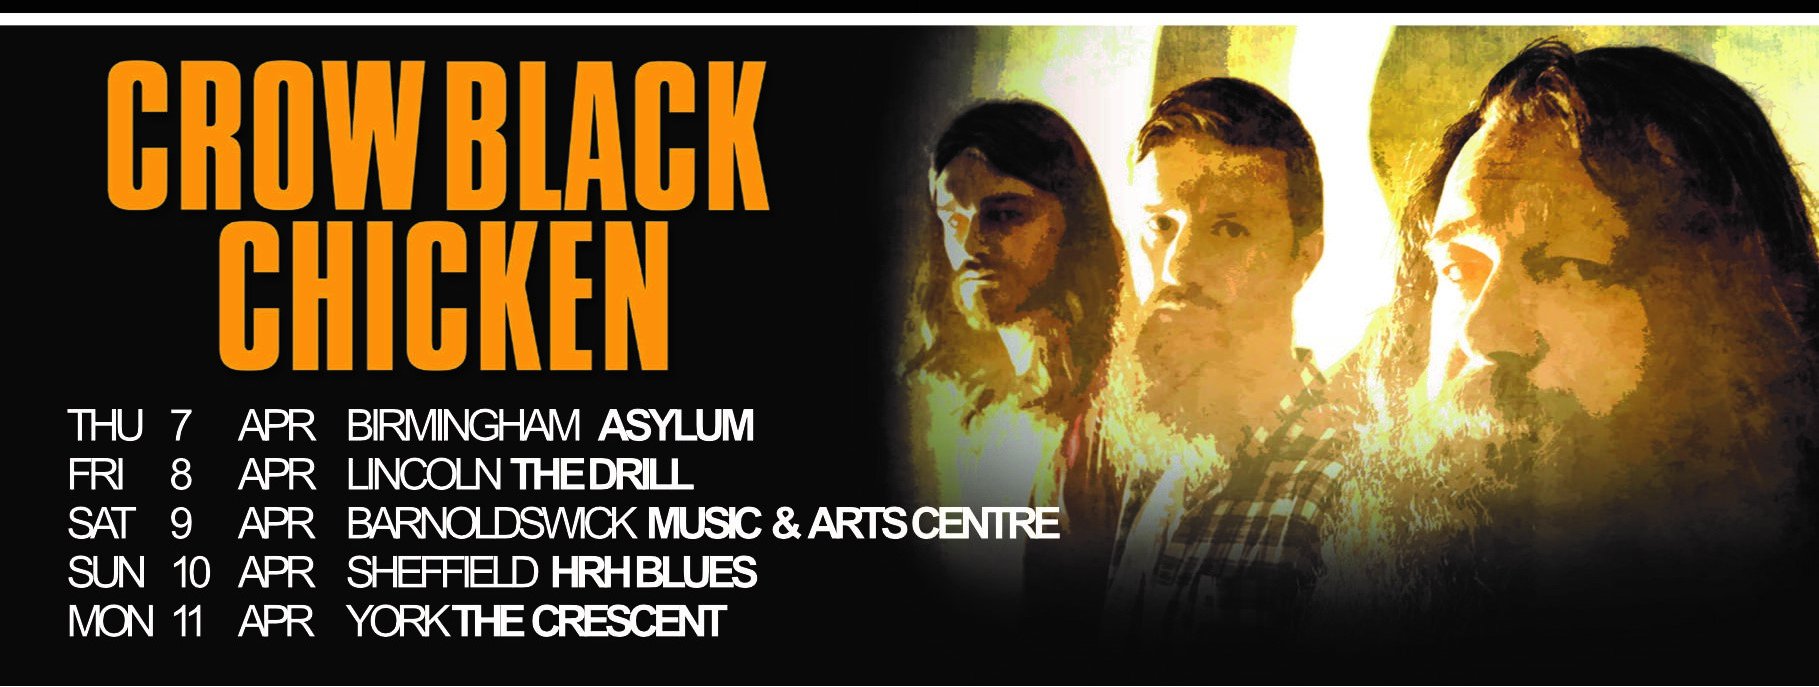 Crow Black Chcken UK Tour